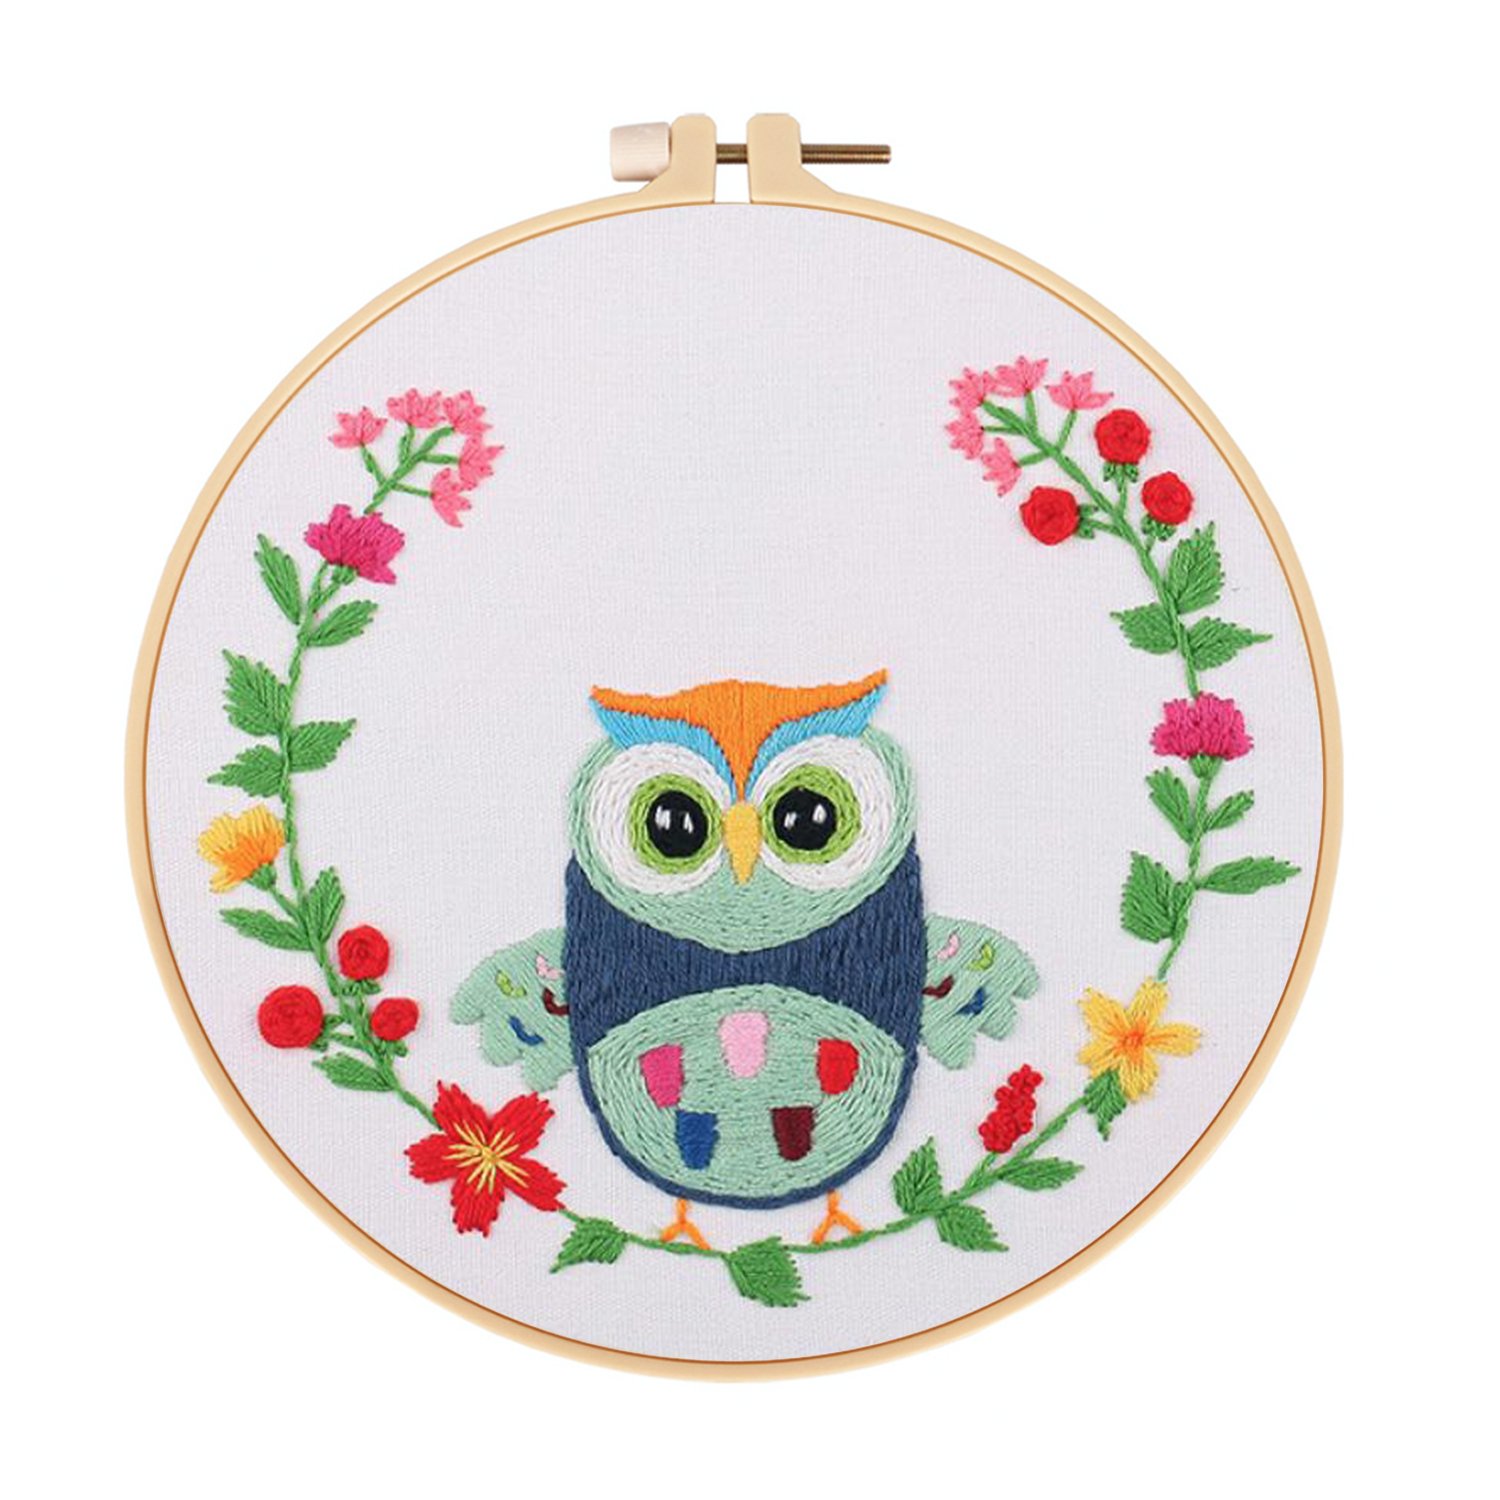 DIY Handmade Embroidery Cross stitch kit for Adult Beginner - Cute Owl Pattern